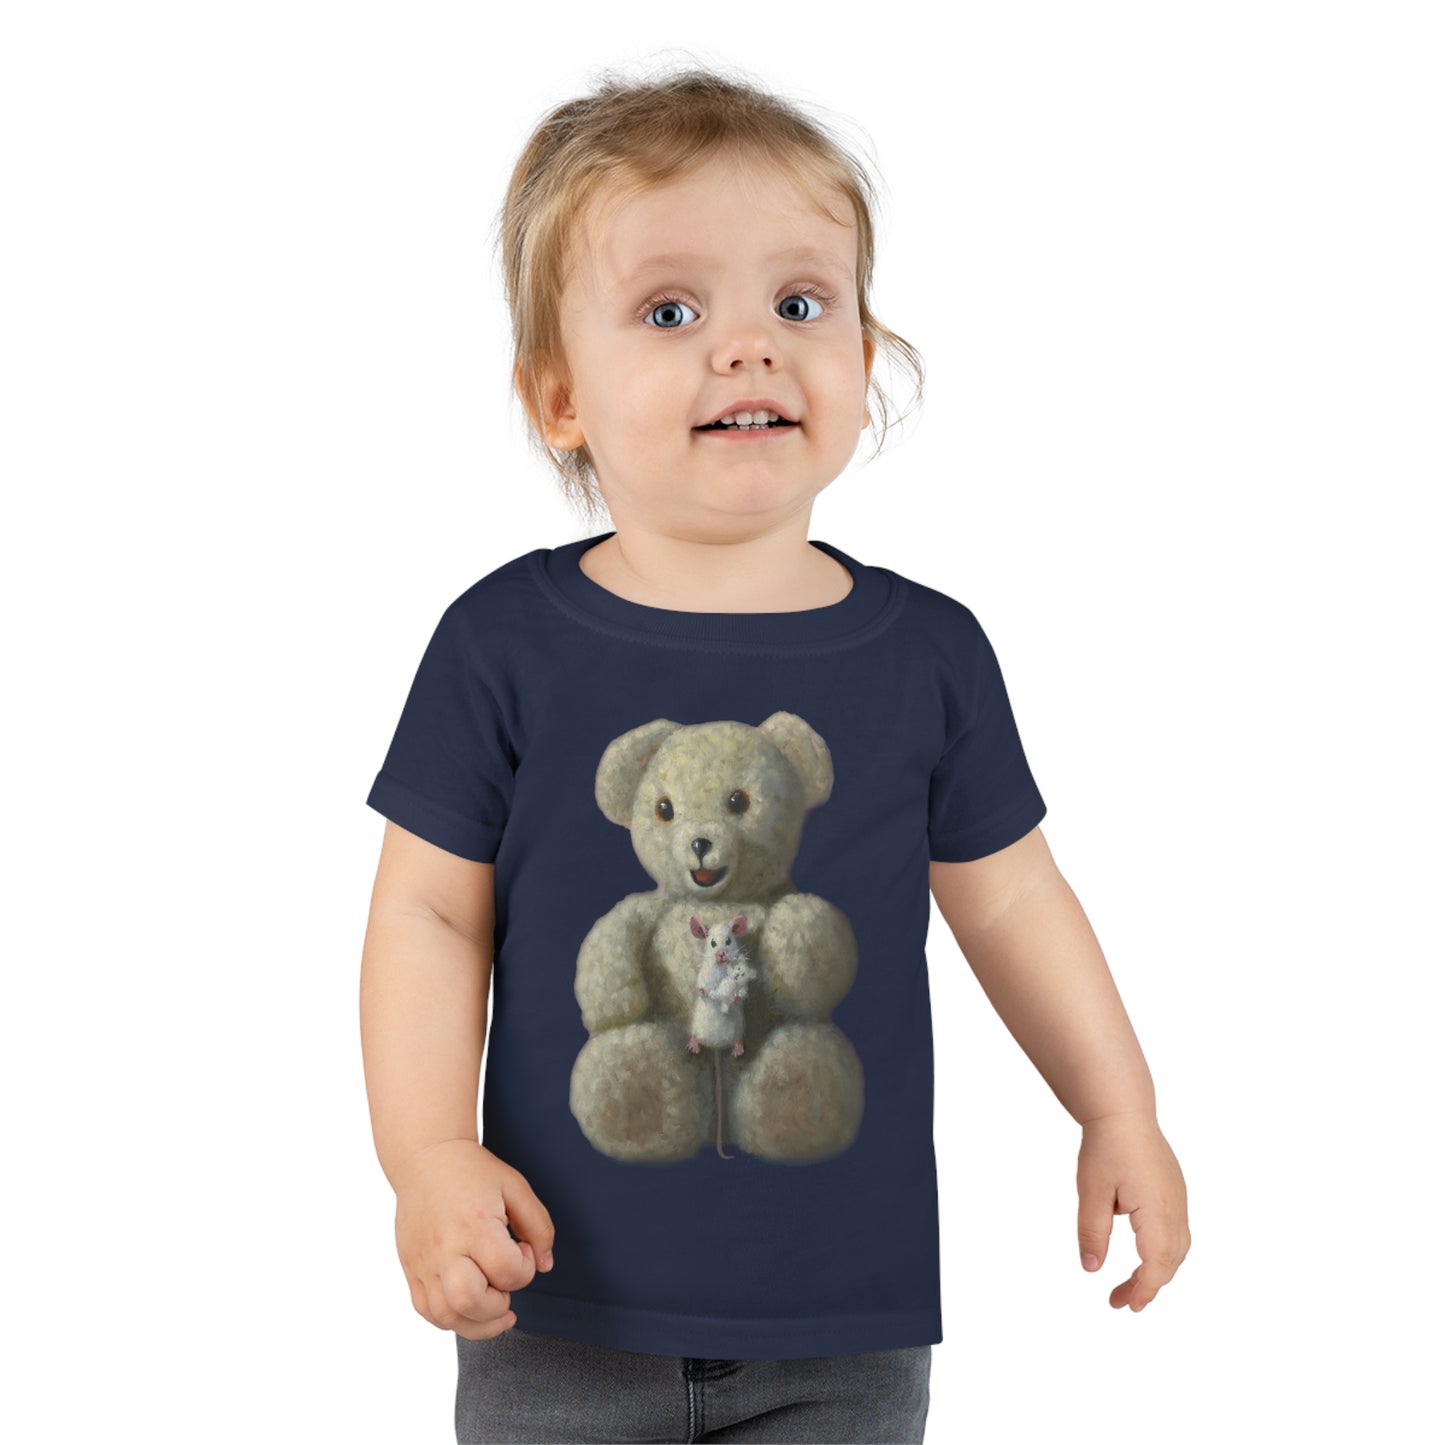 Stuart Dunkel: "Teddies" - Toddler T-shirt